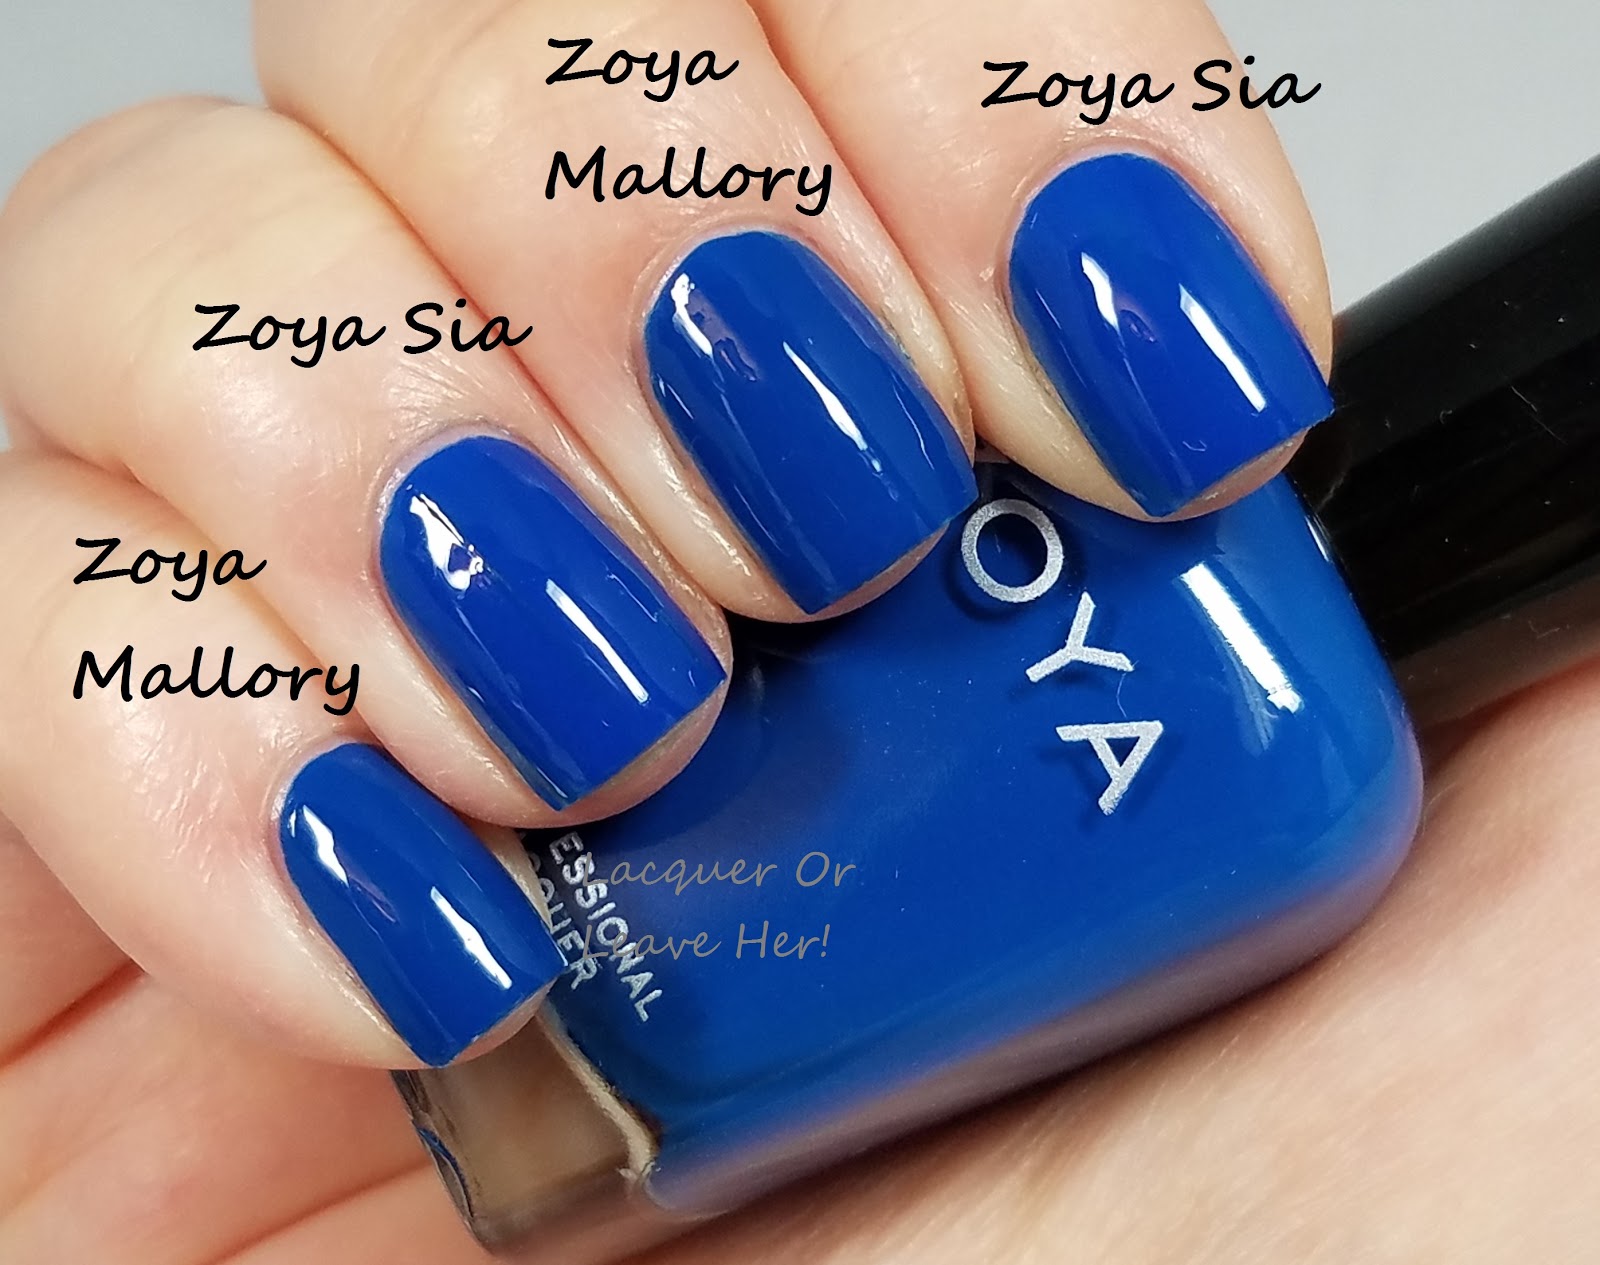 7. Zoya Nail Polish in "Sia" - wide 7